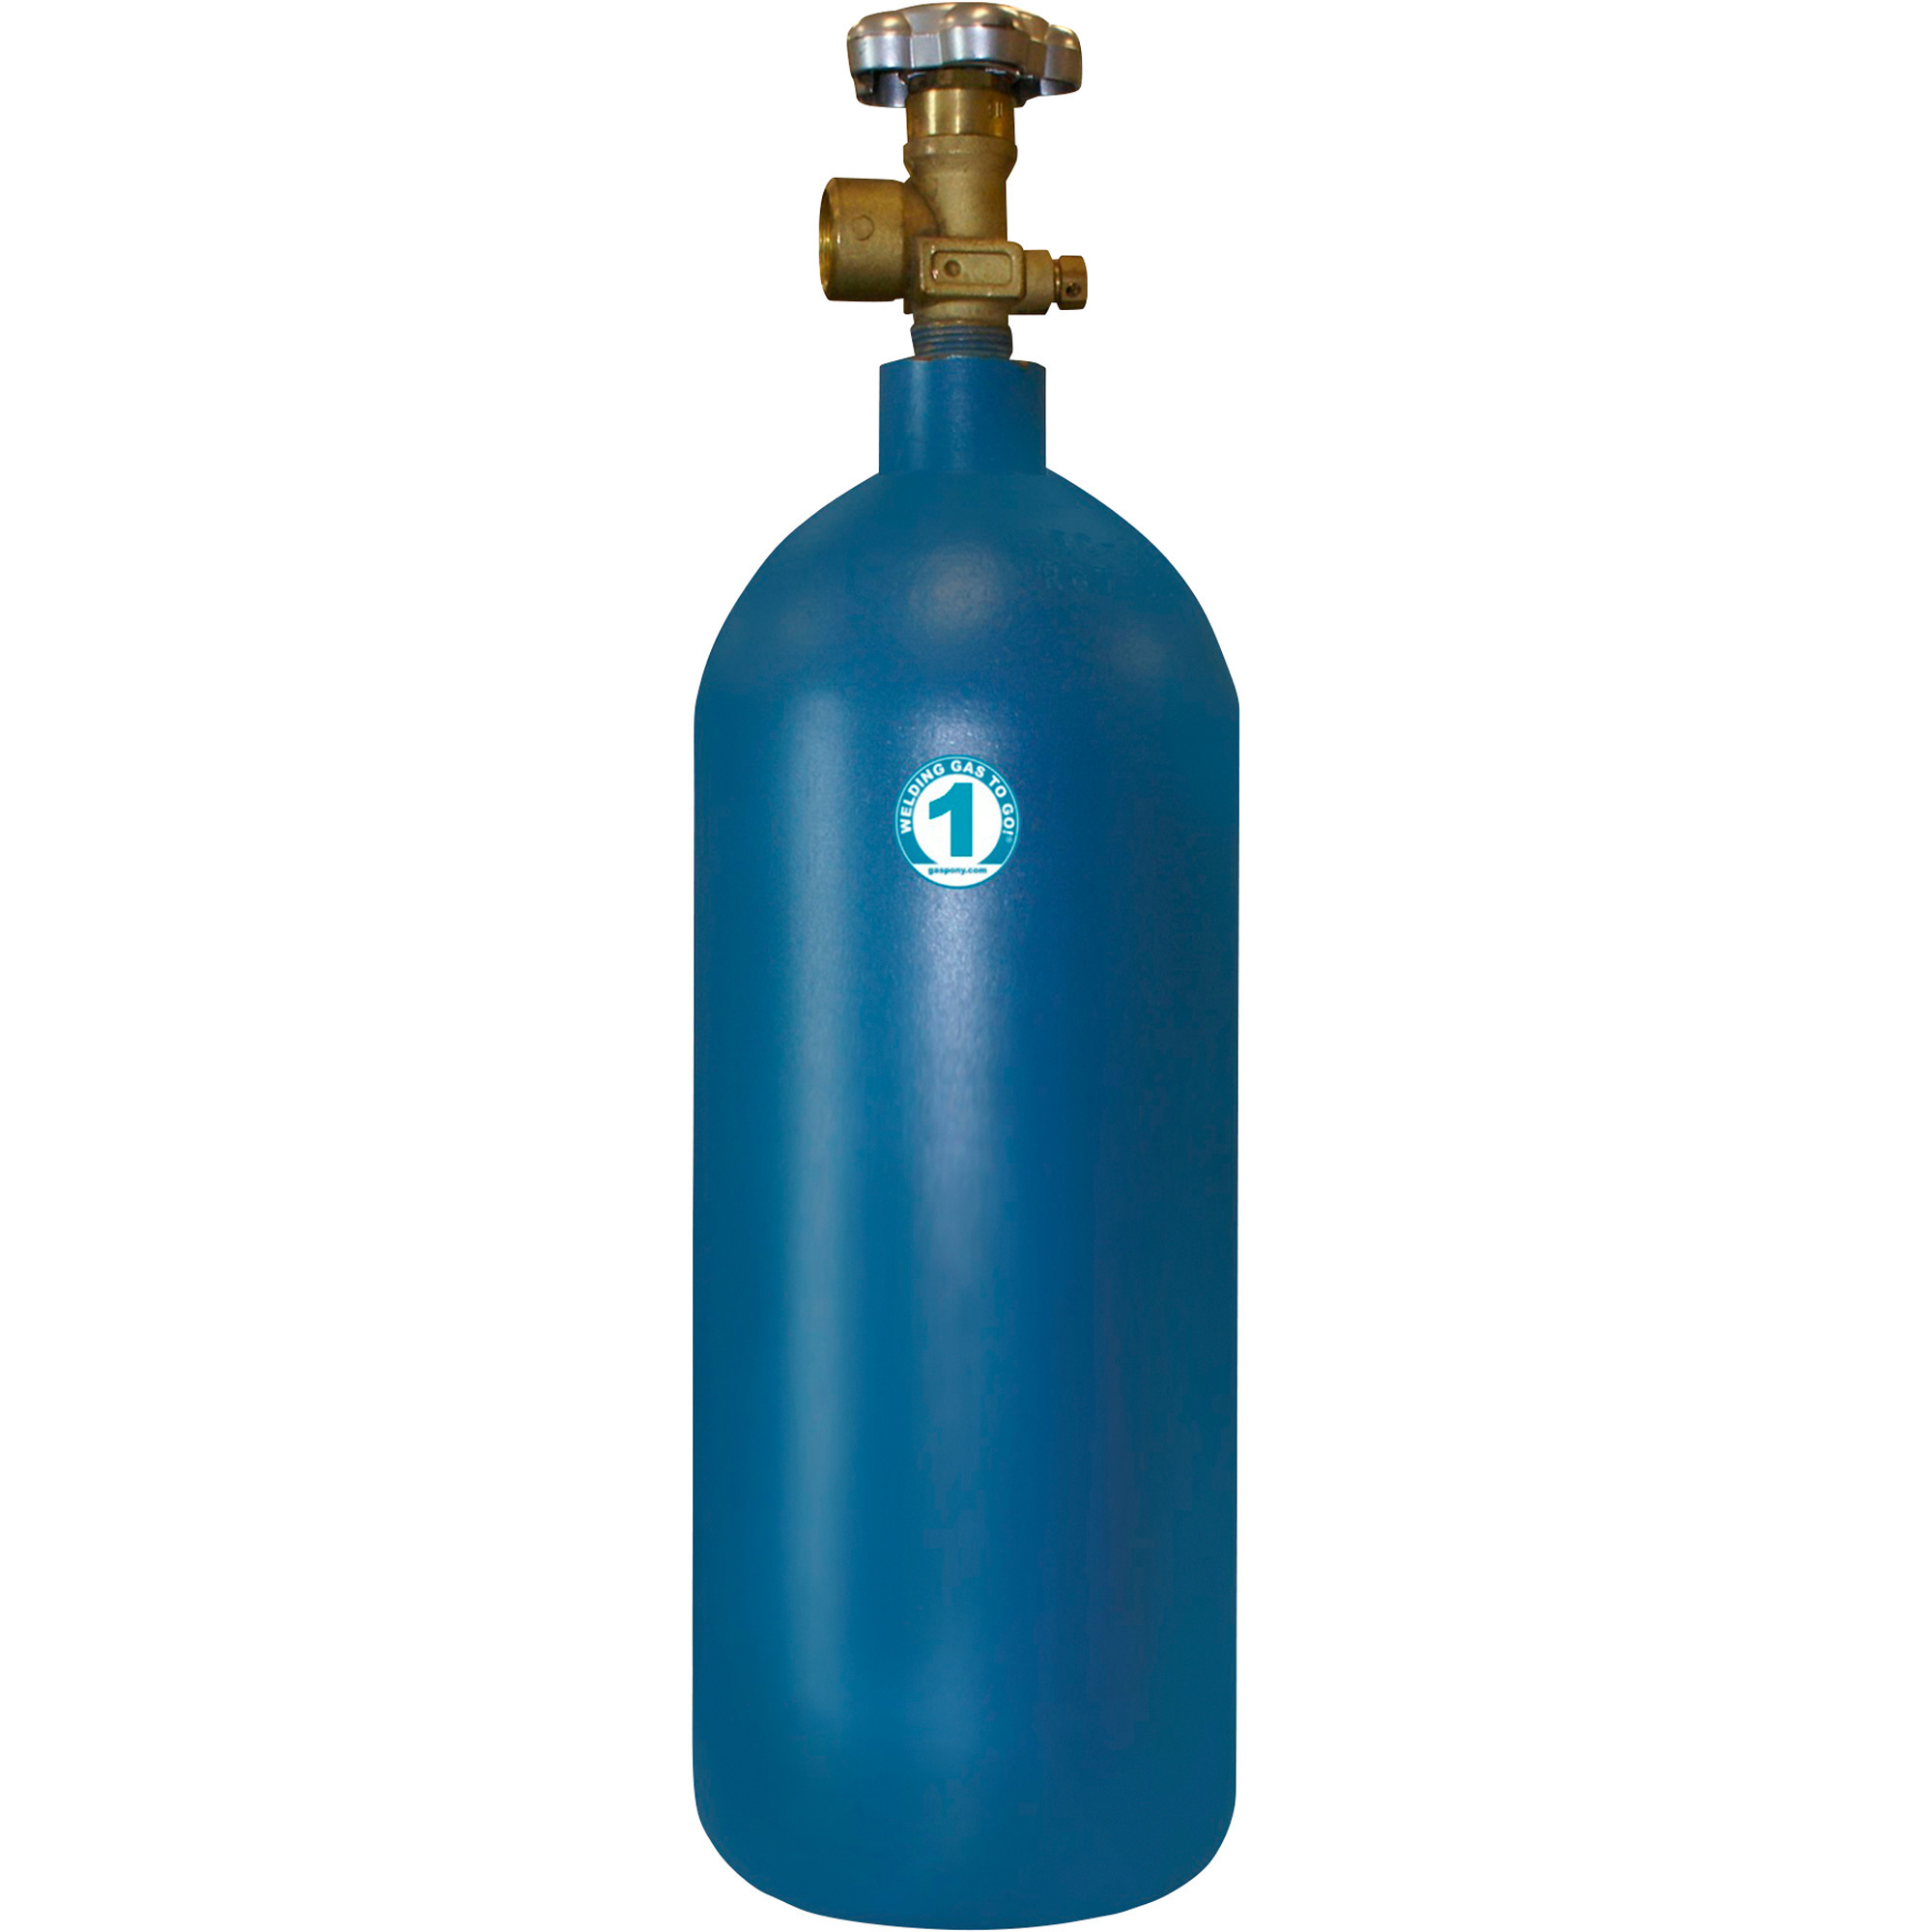 Thoroughbred Oxygen Gas Cylinder Fill or Exchange â Size #1, 20CF